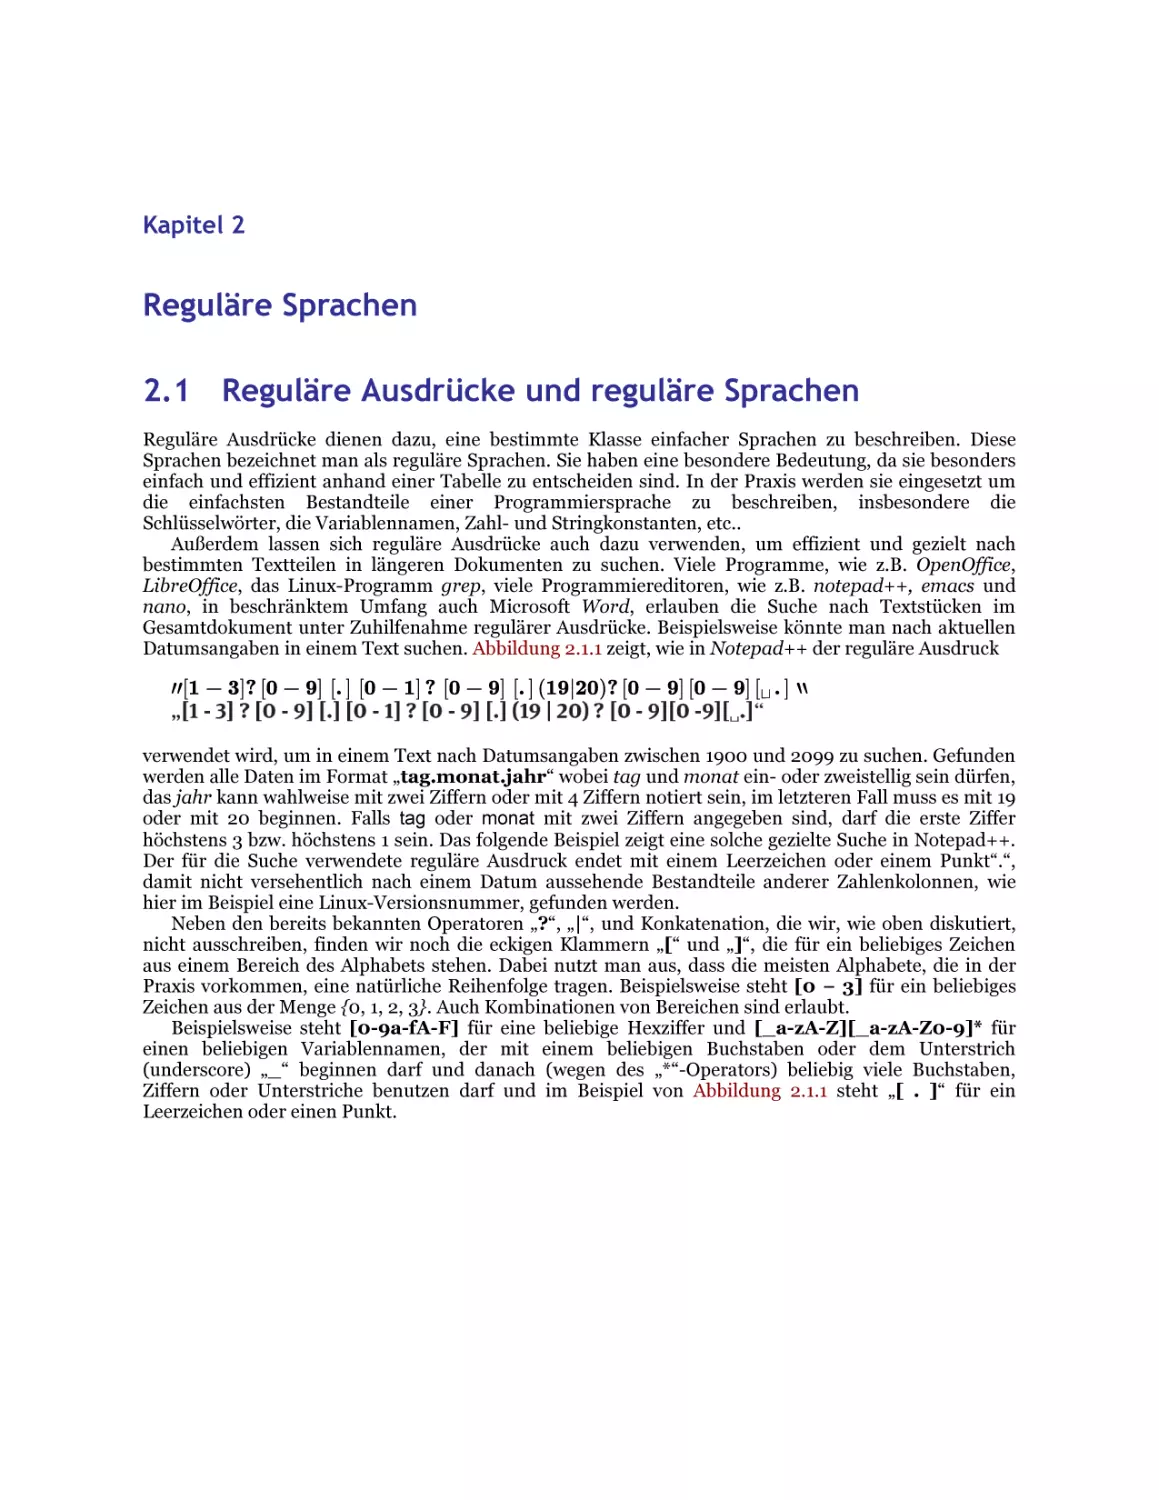 2 Reguläre Sprachen
2.1 Reguläre Ausdrücke und reguläre Sprachen